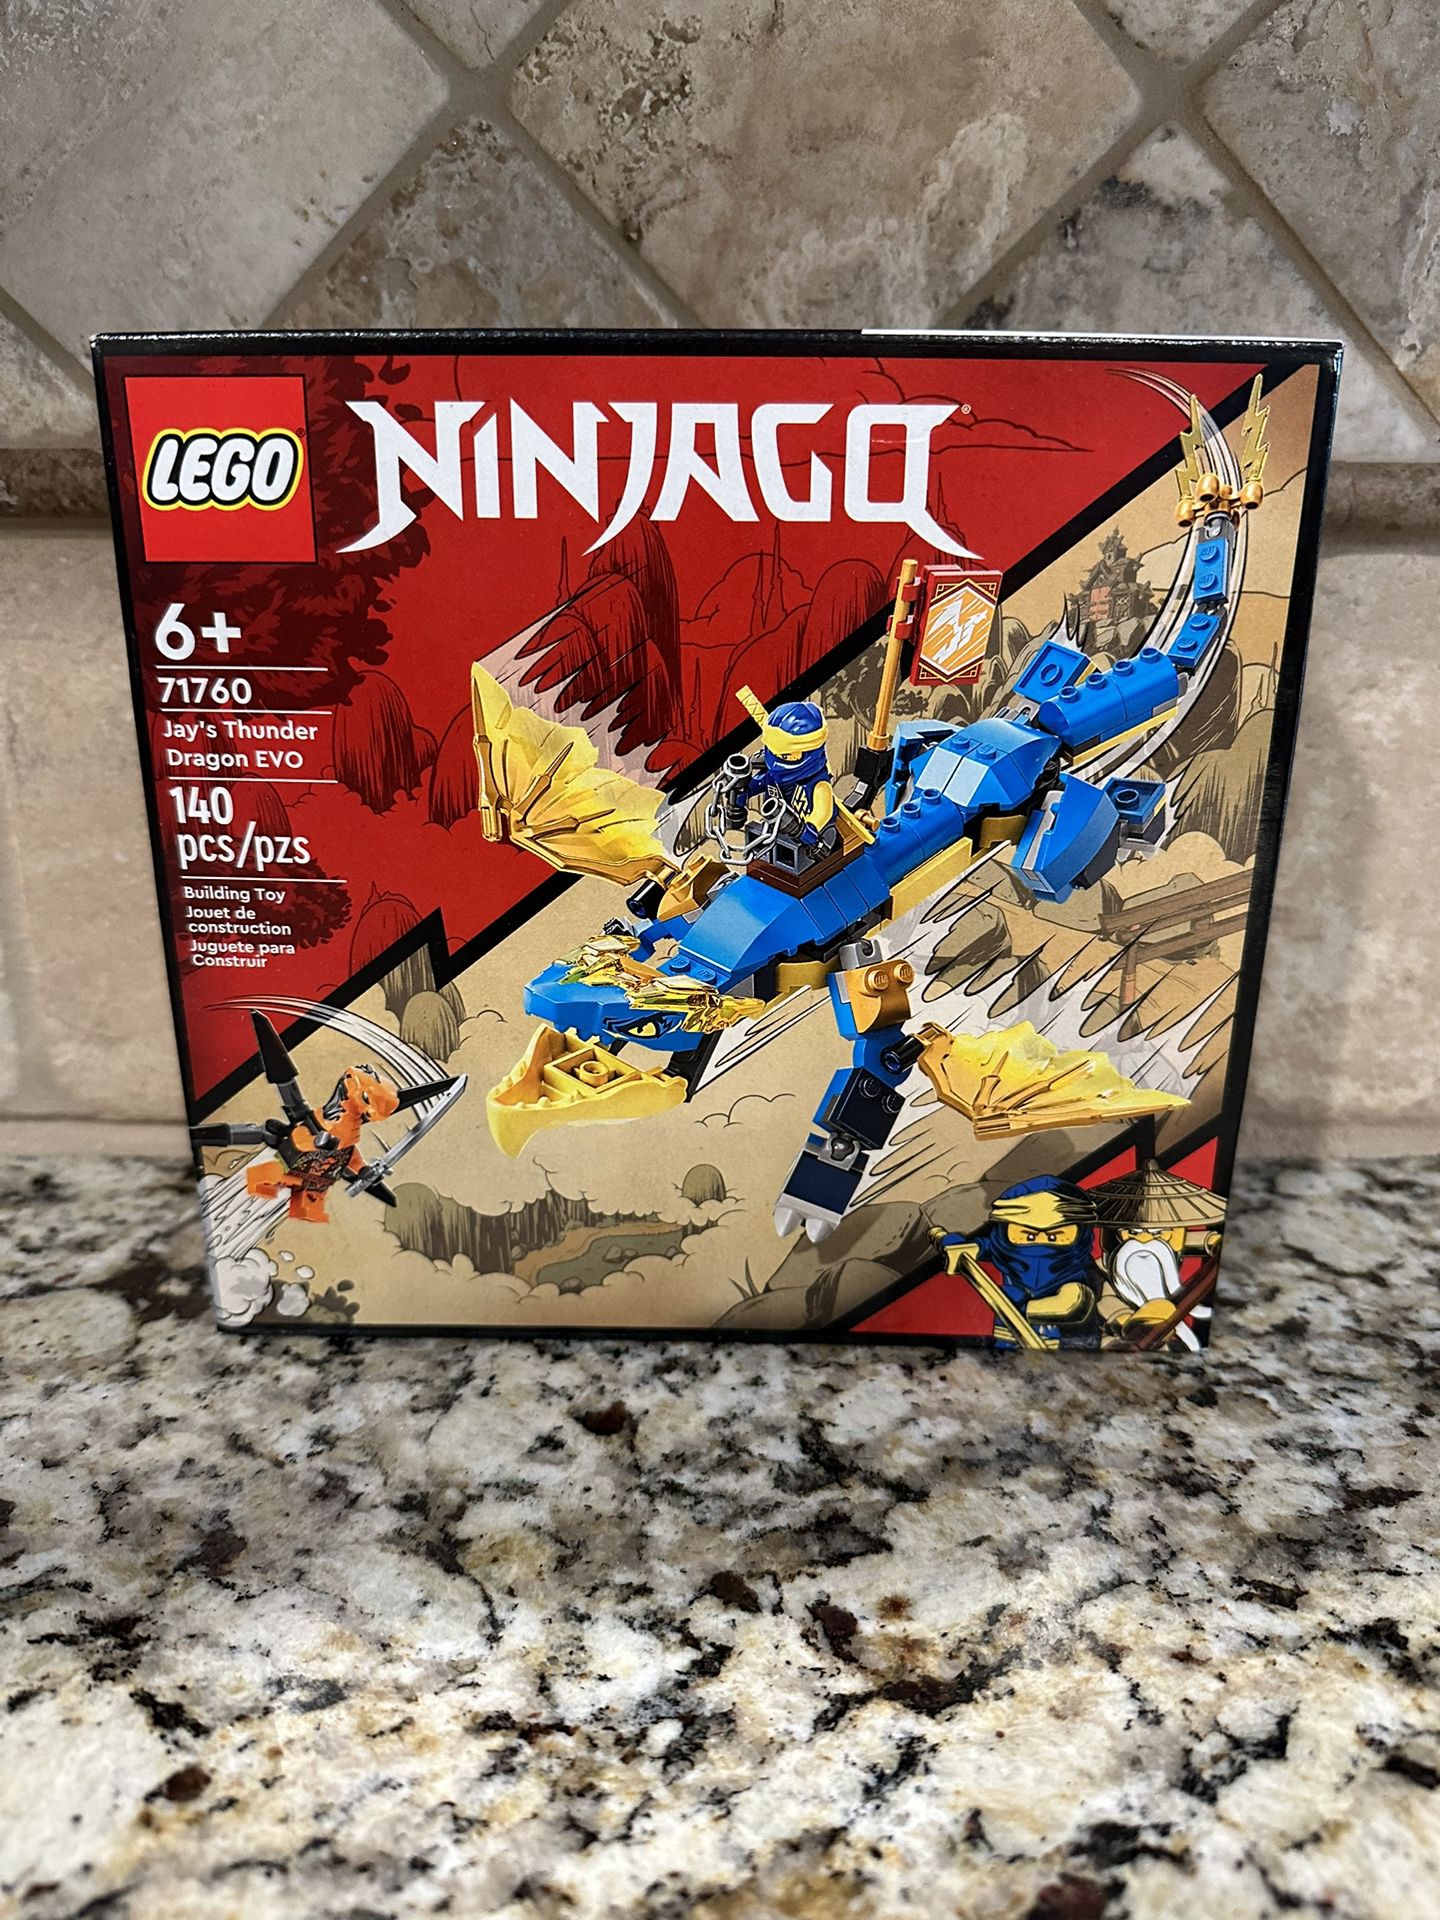 71760 Jay's Thunder Dragon EVO - LEGO Ninjago - LEGO